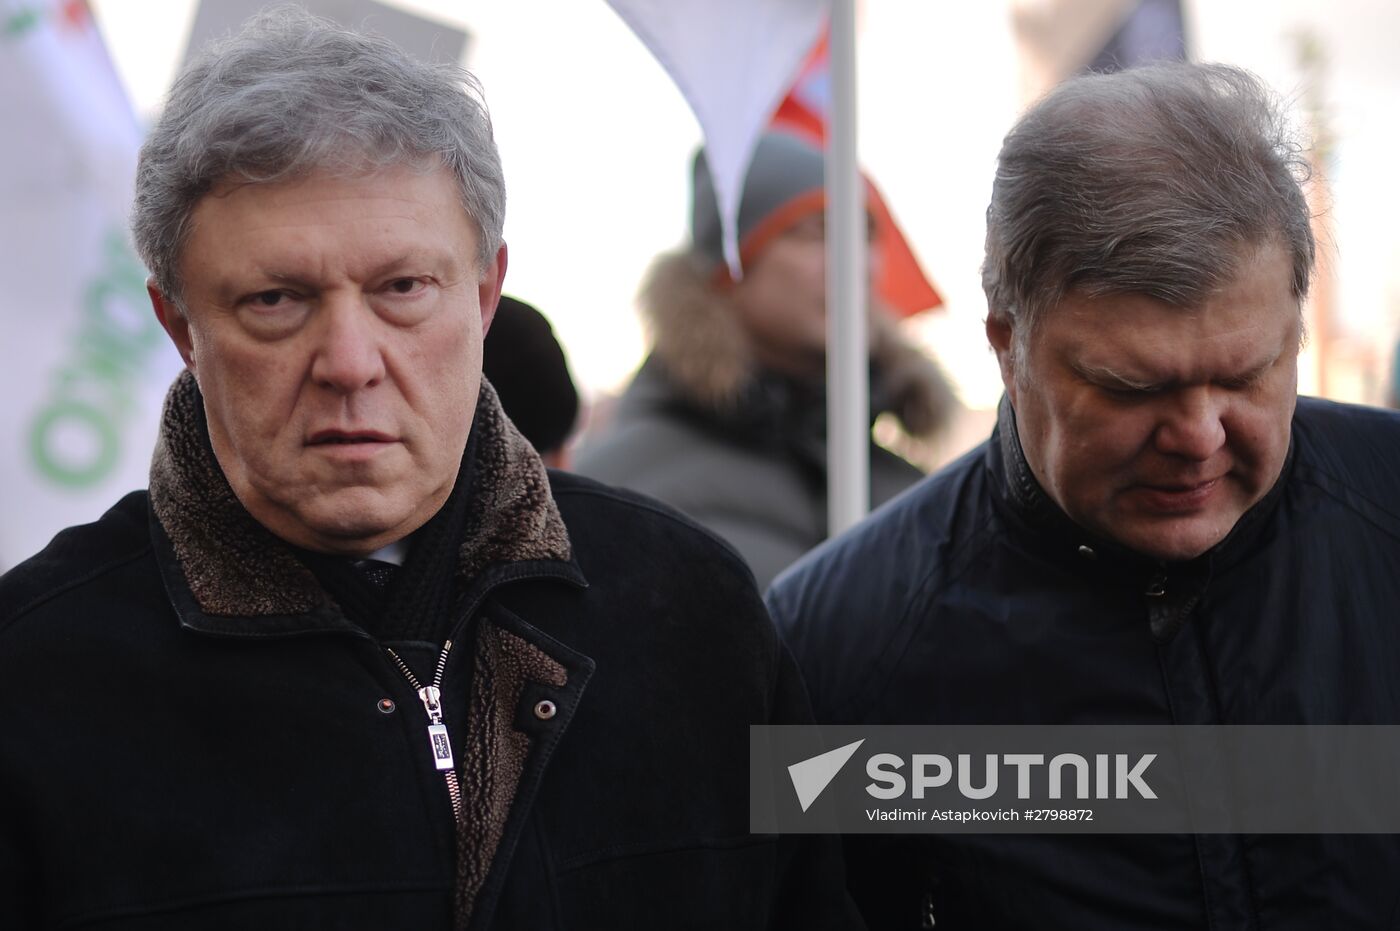 Boris Nemtsov's memory march